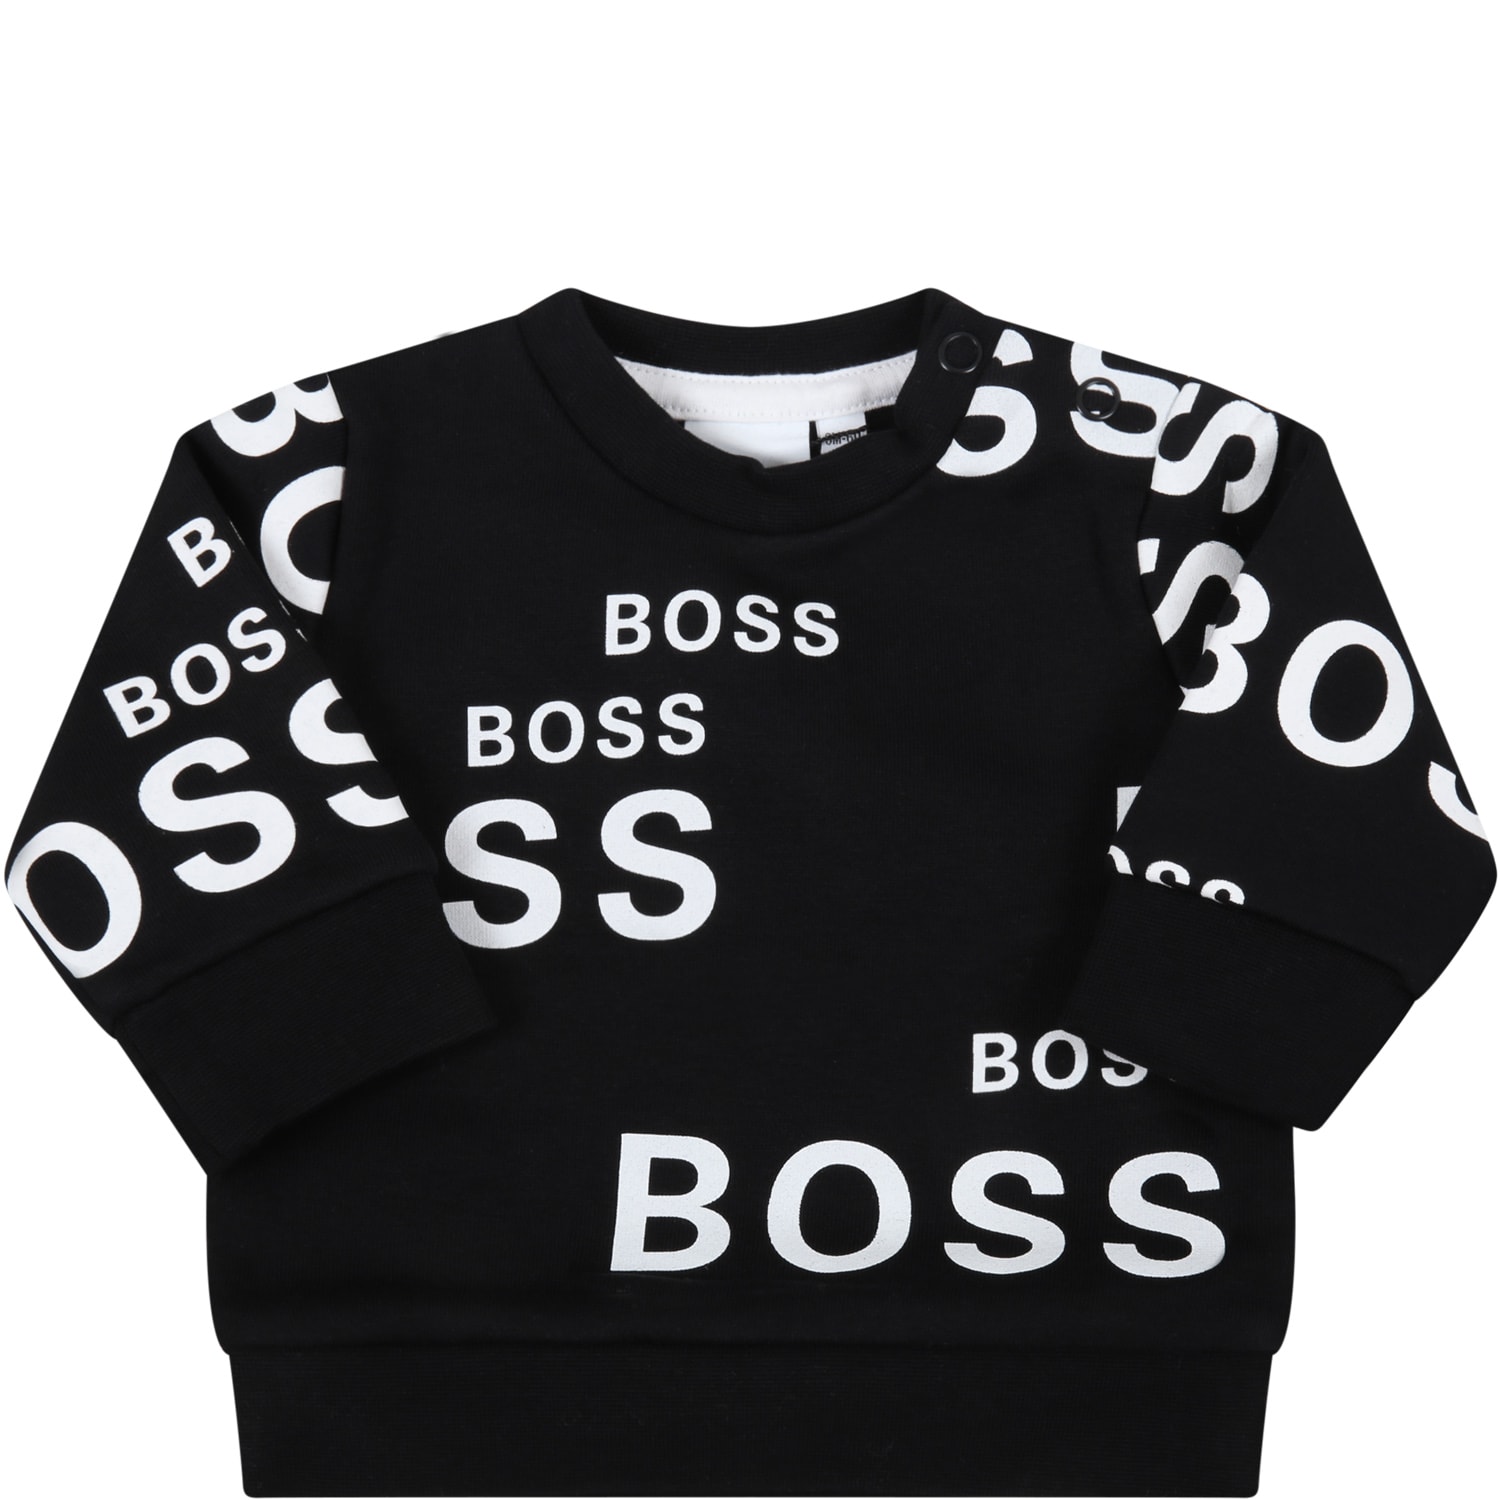 Hugo Boss Black Sweatshirt For Baby Kids With Logos